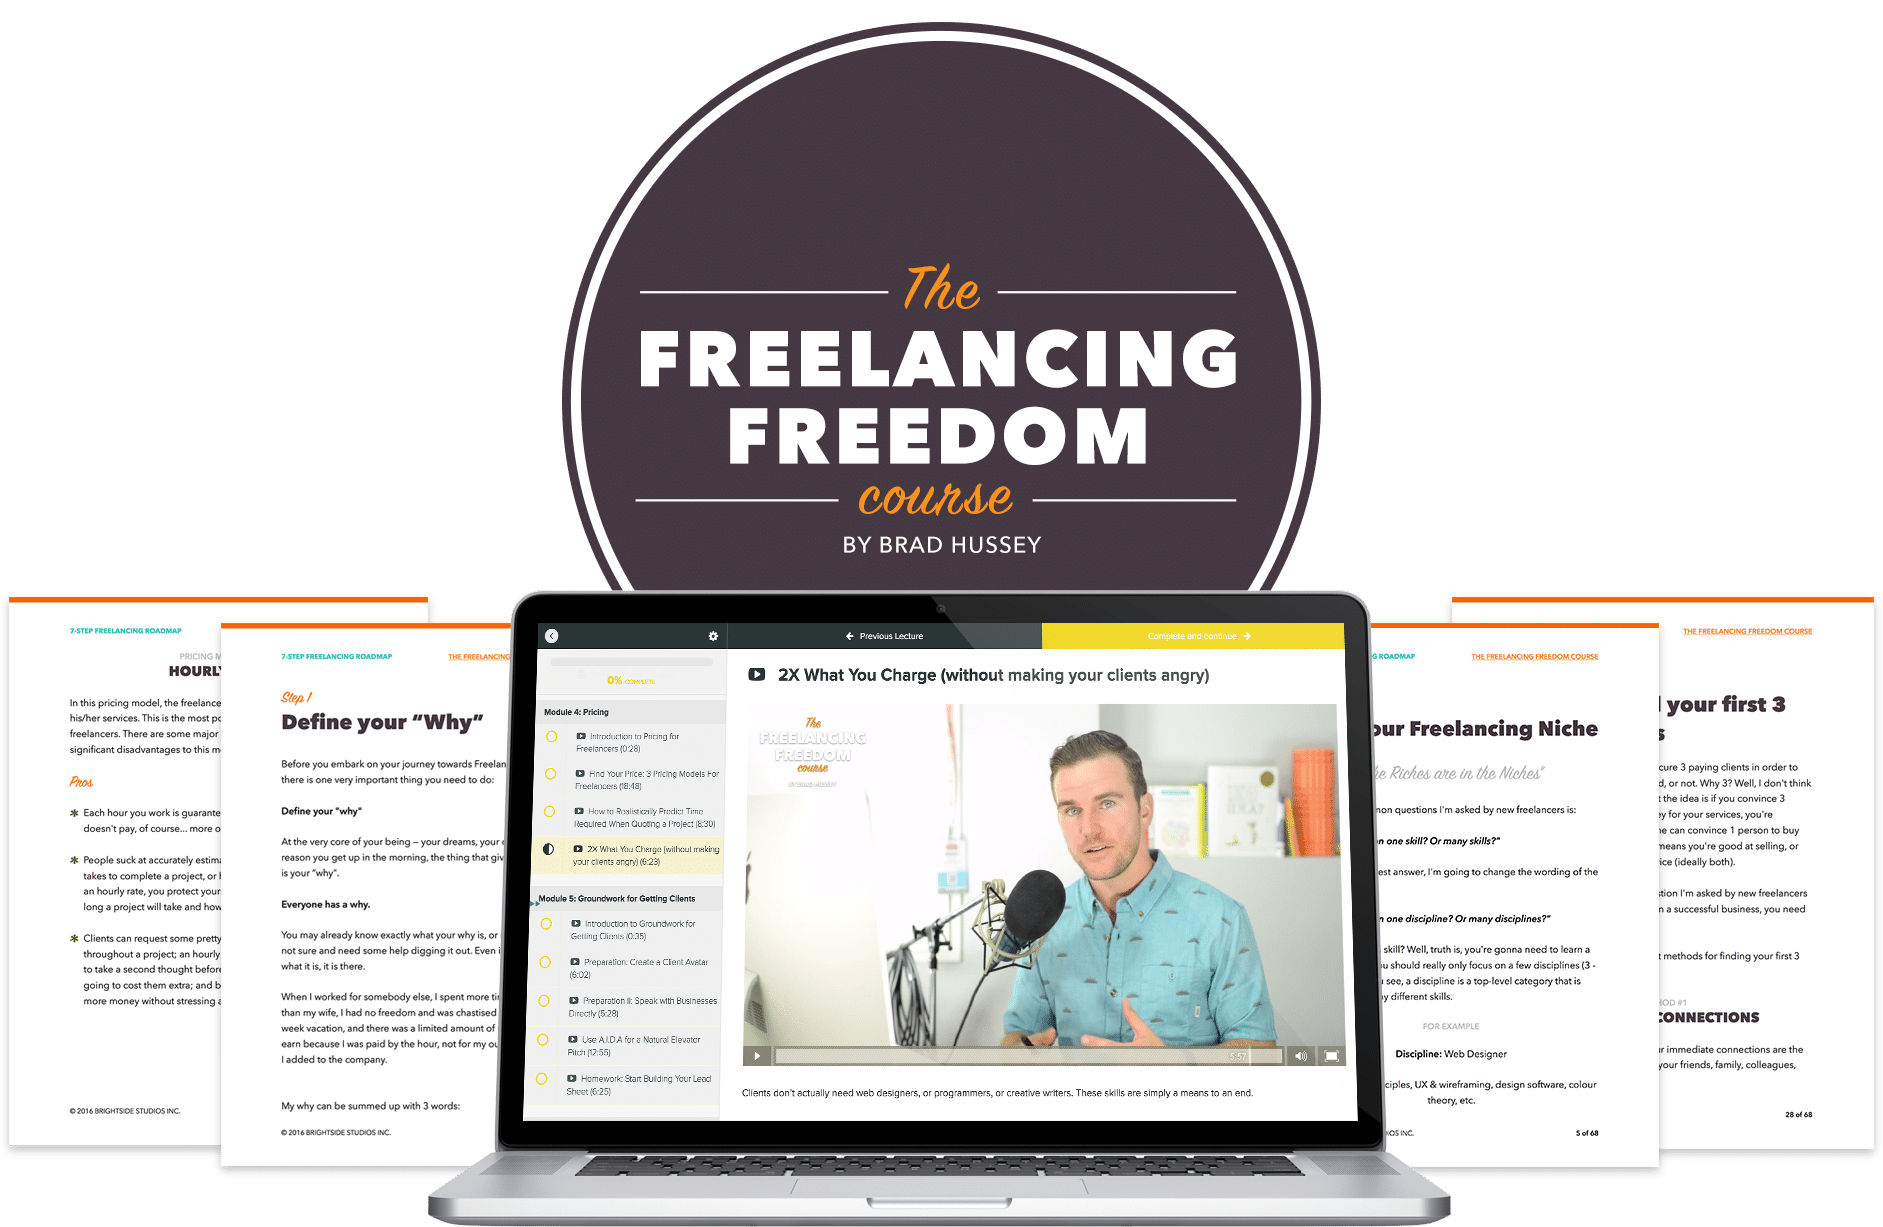 Freelancer Freedom Course